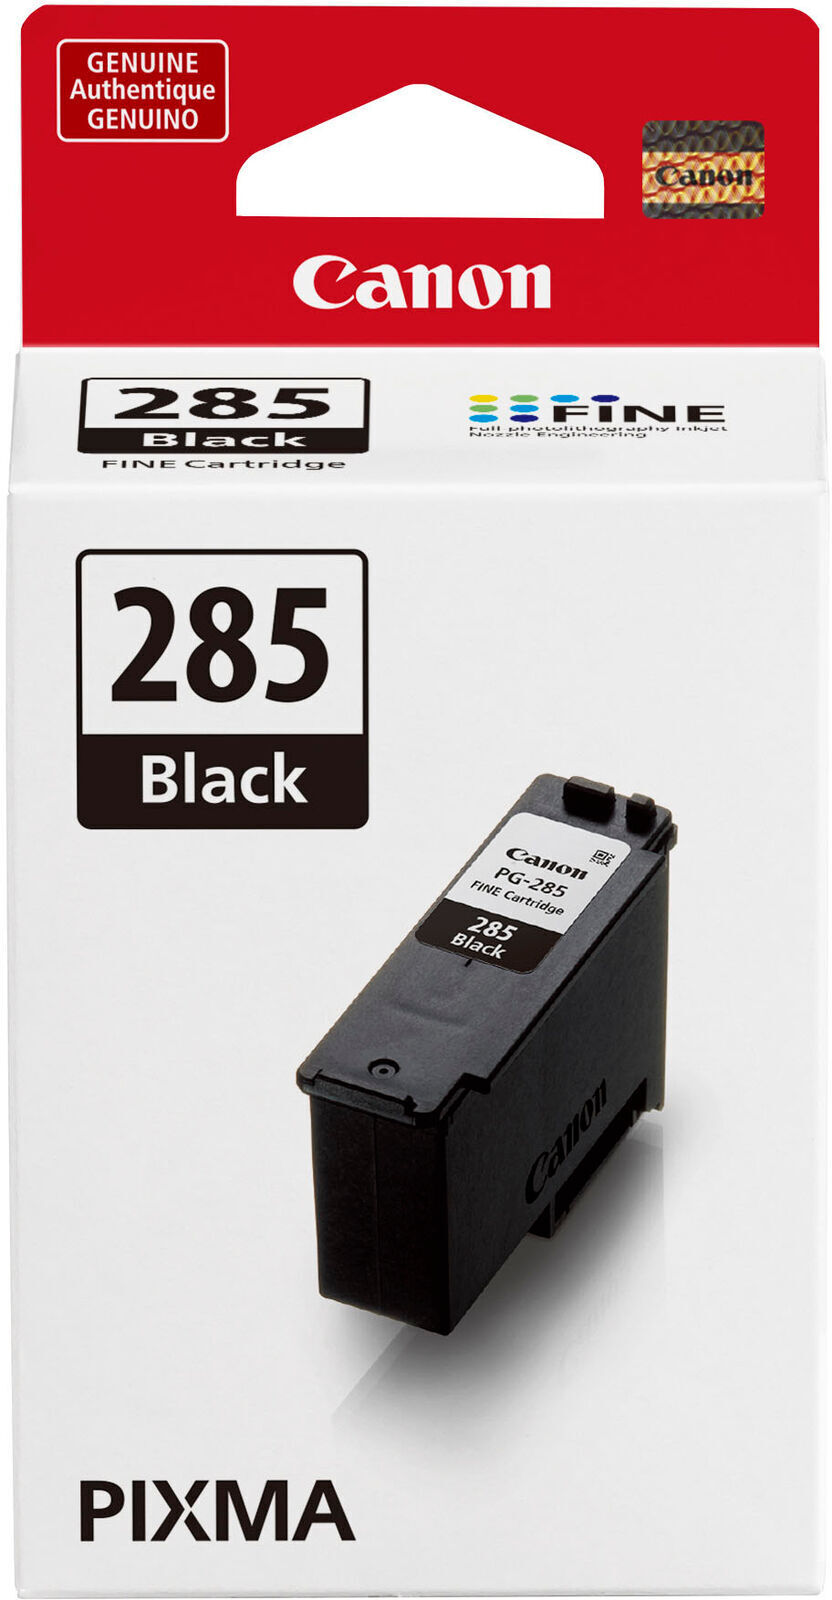 NEW Canon PG-285 CL-286 Ink Cartridge Black Color XL OEM Lot PIXMA TS7720 TR7820